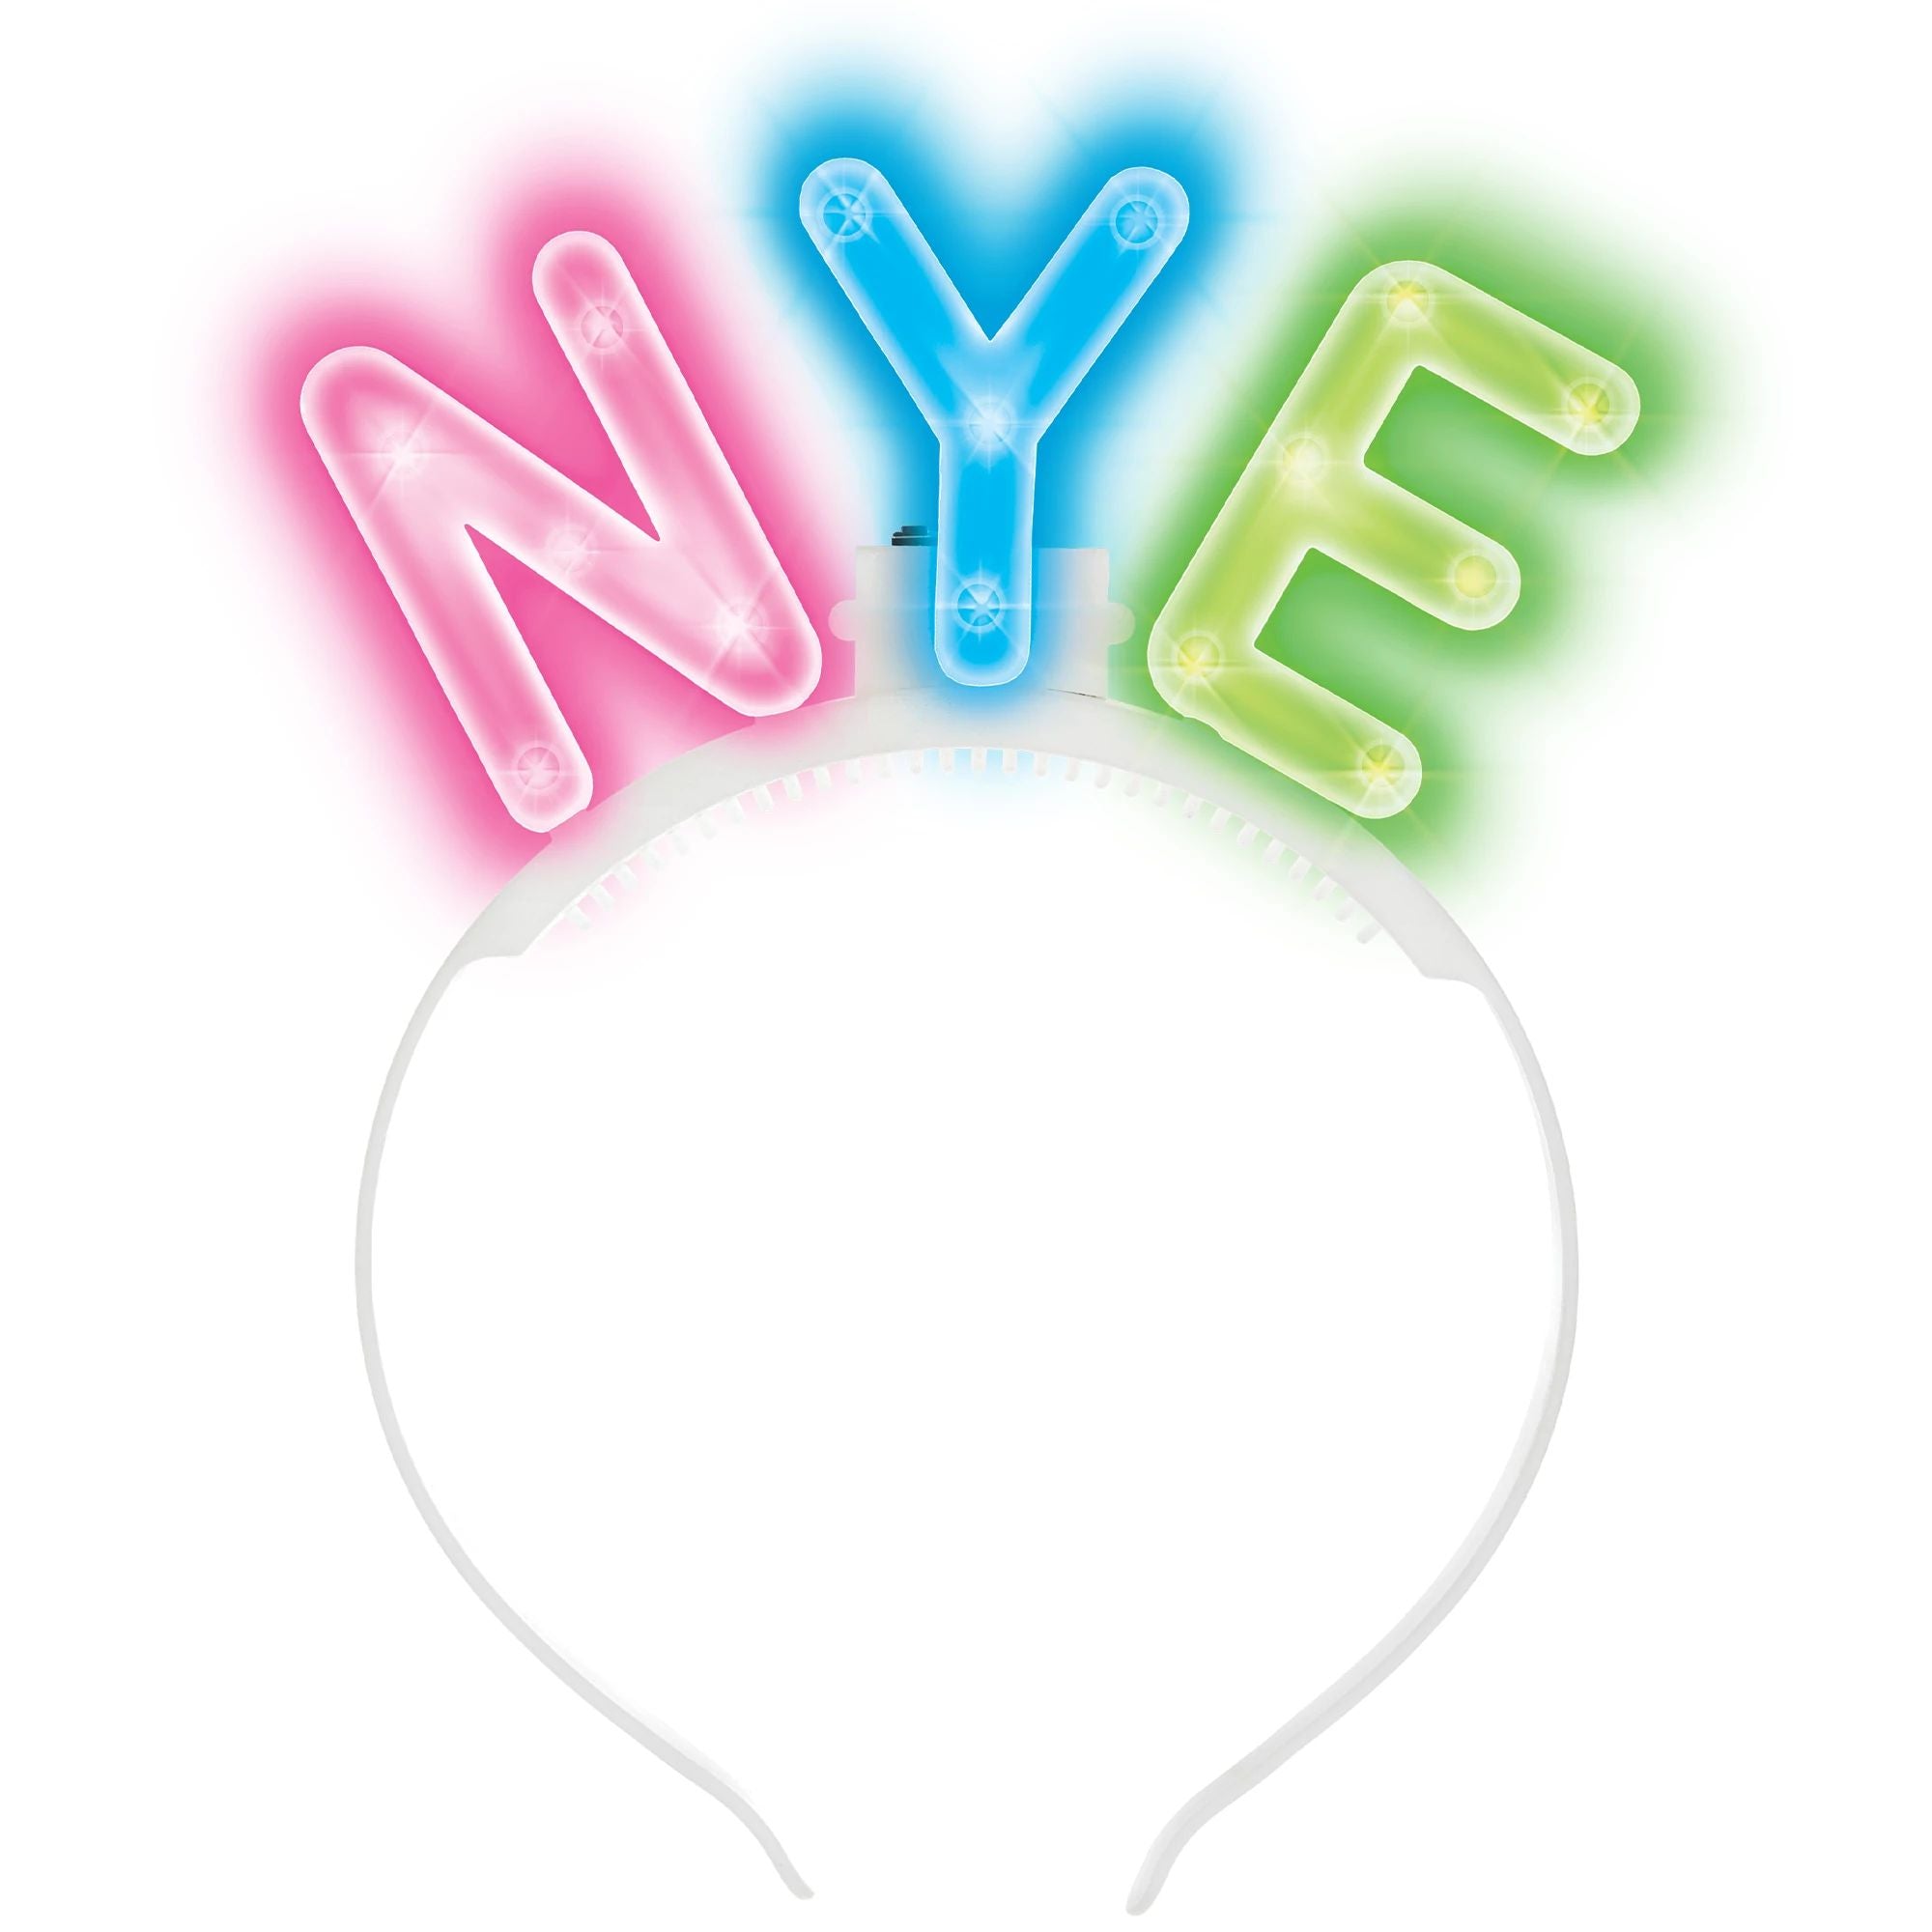 Amscan HOLIDAY: NEW YEAR'S NYE Light-Up Neon Headband